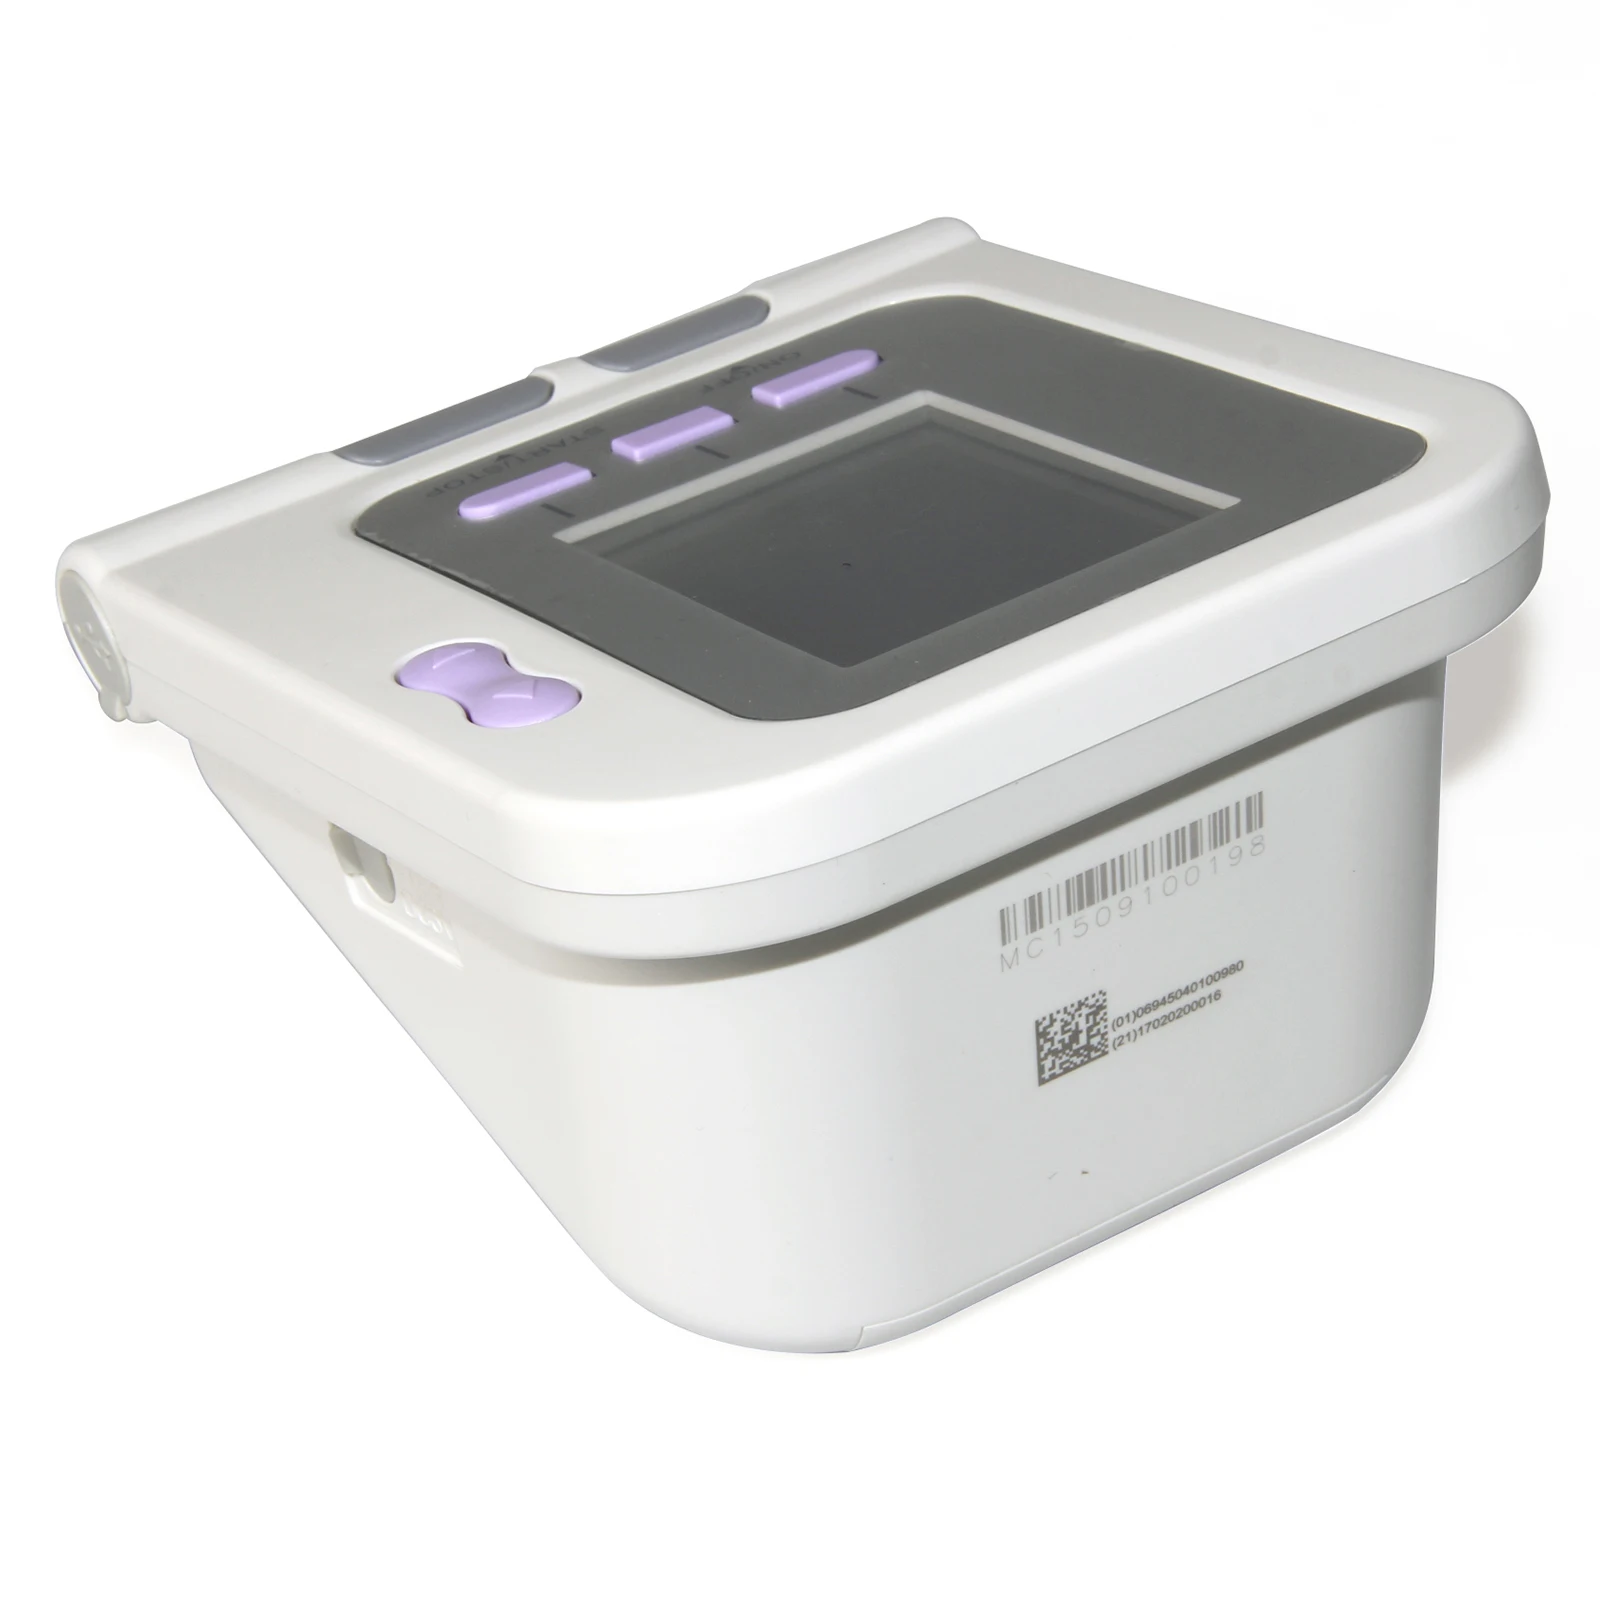 Veterinary Bp Machine Measurement Sphygmomanometer Pulse Oximeter Arm Type Tensiometers Vet Digital Blood Pressure Monitor - enlarge